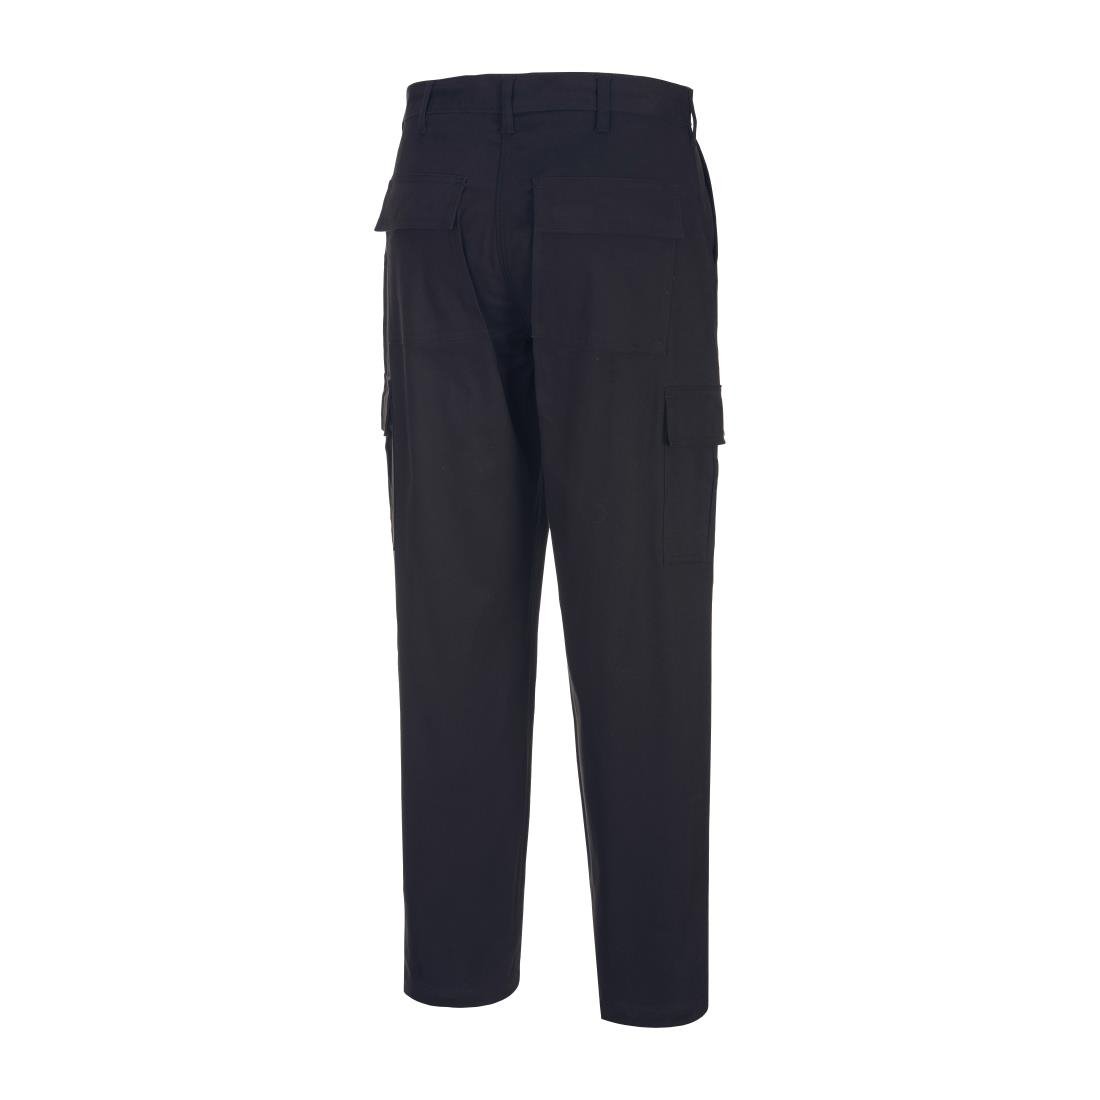 BA088-16 Portwest Eco Women's Stretch Cargo Trousers Black Size 16